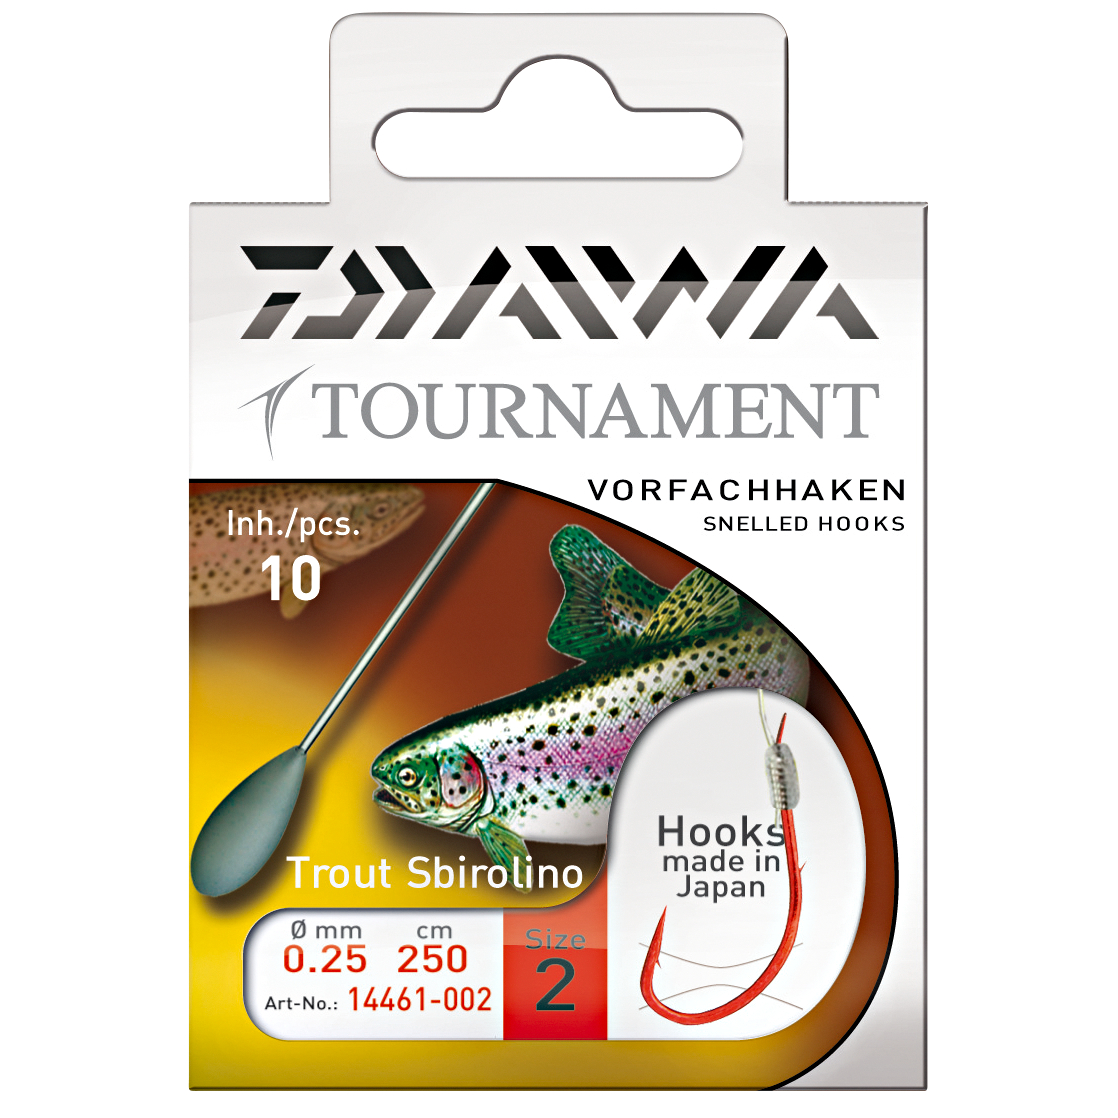 Daiwa Sbirolino hooks Tournament at low prices